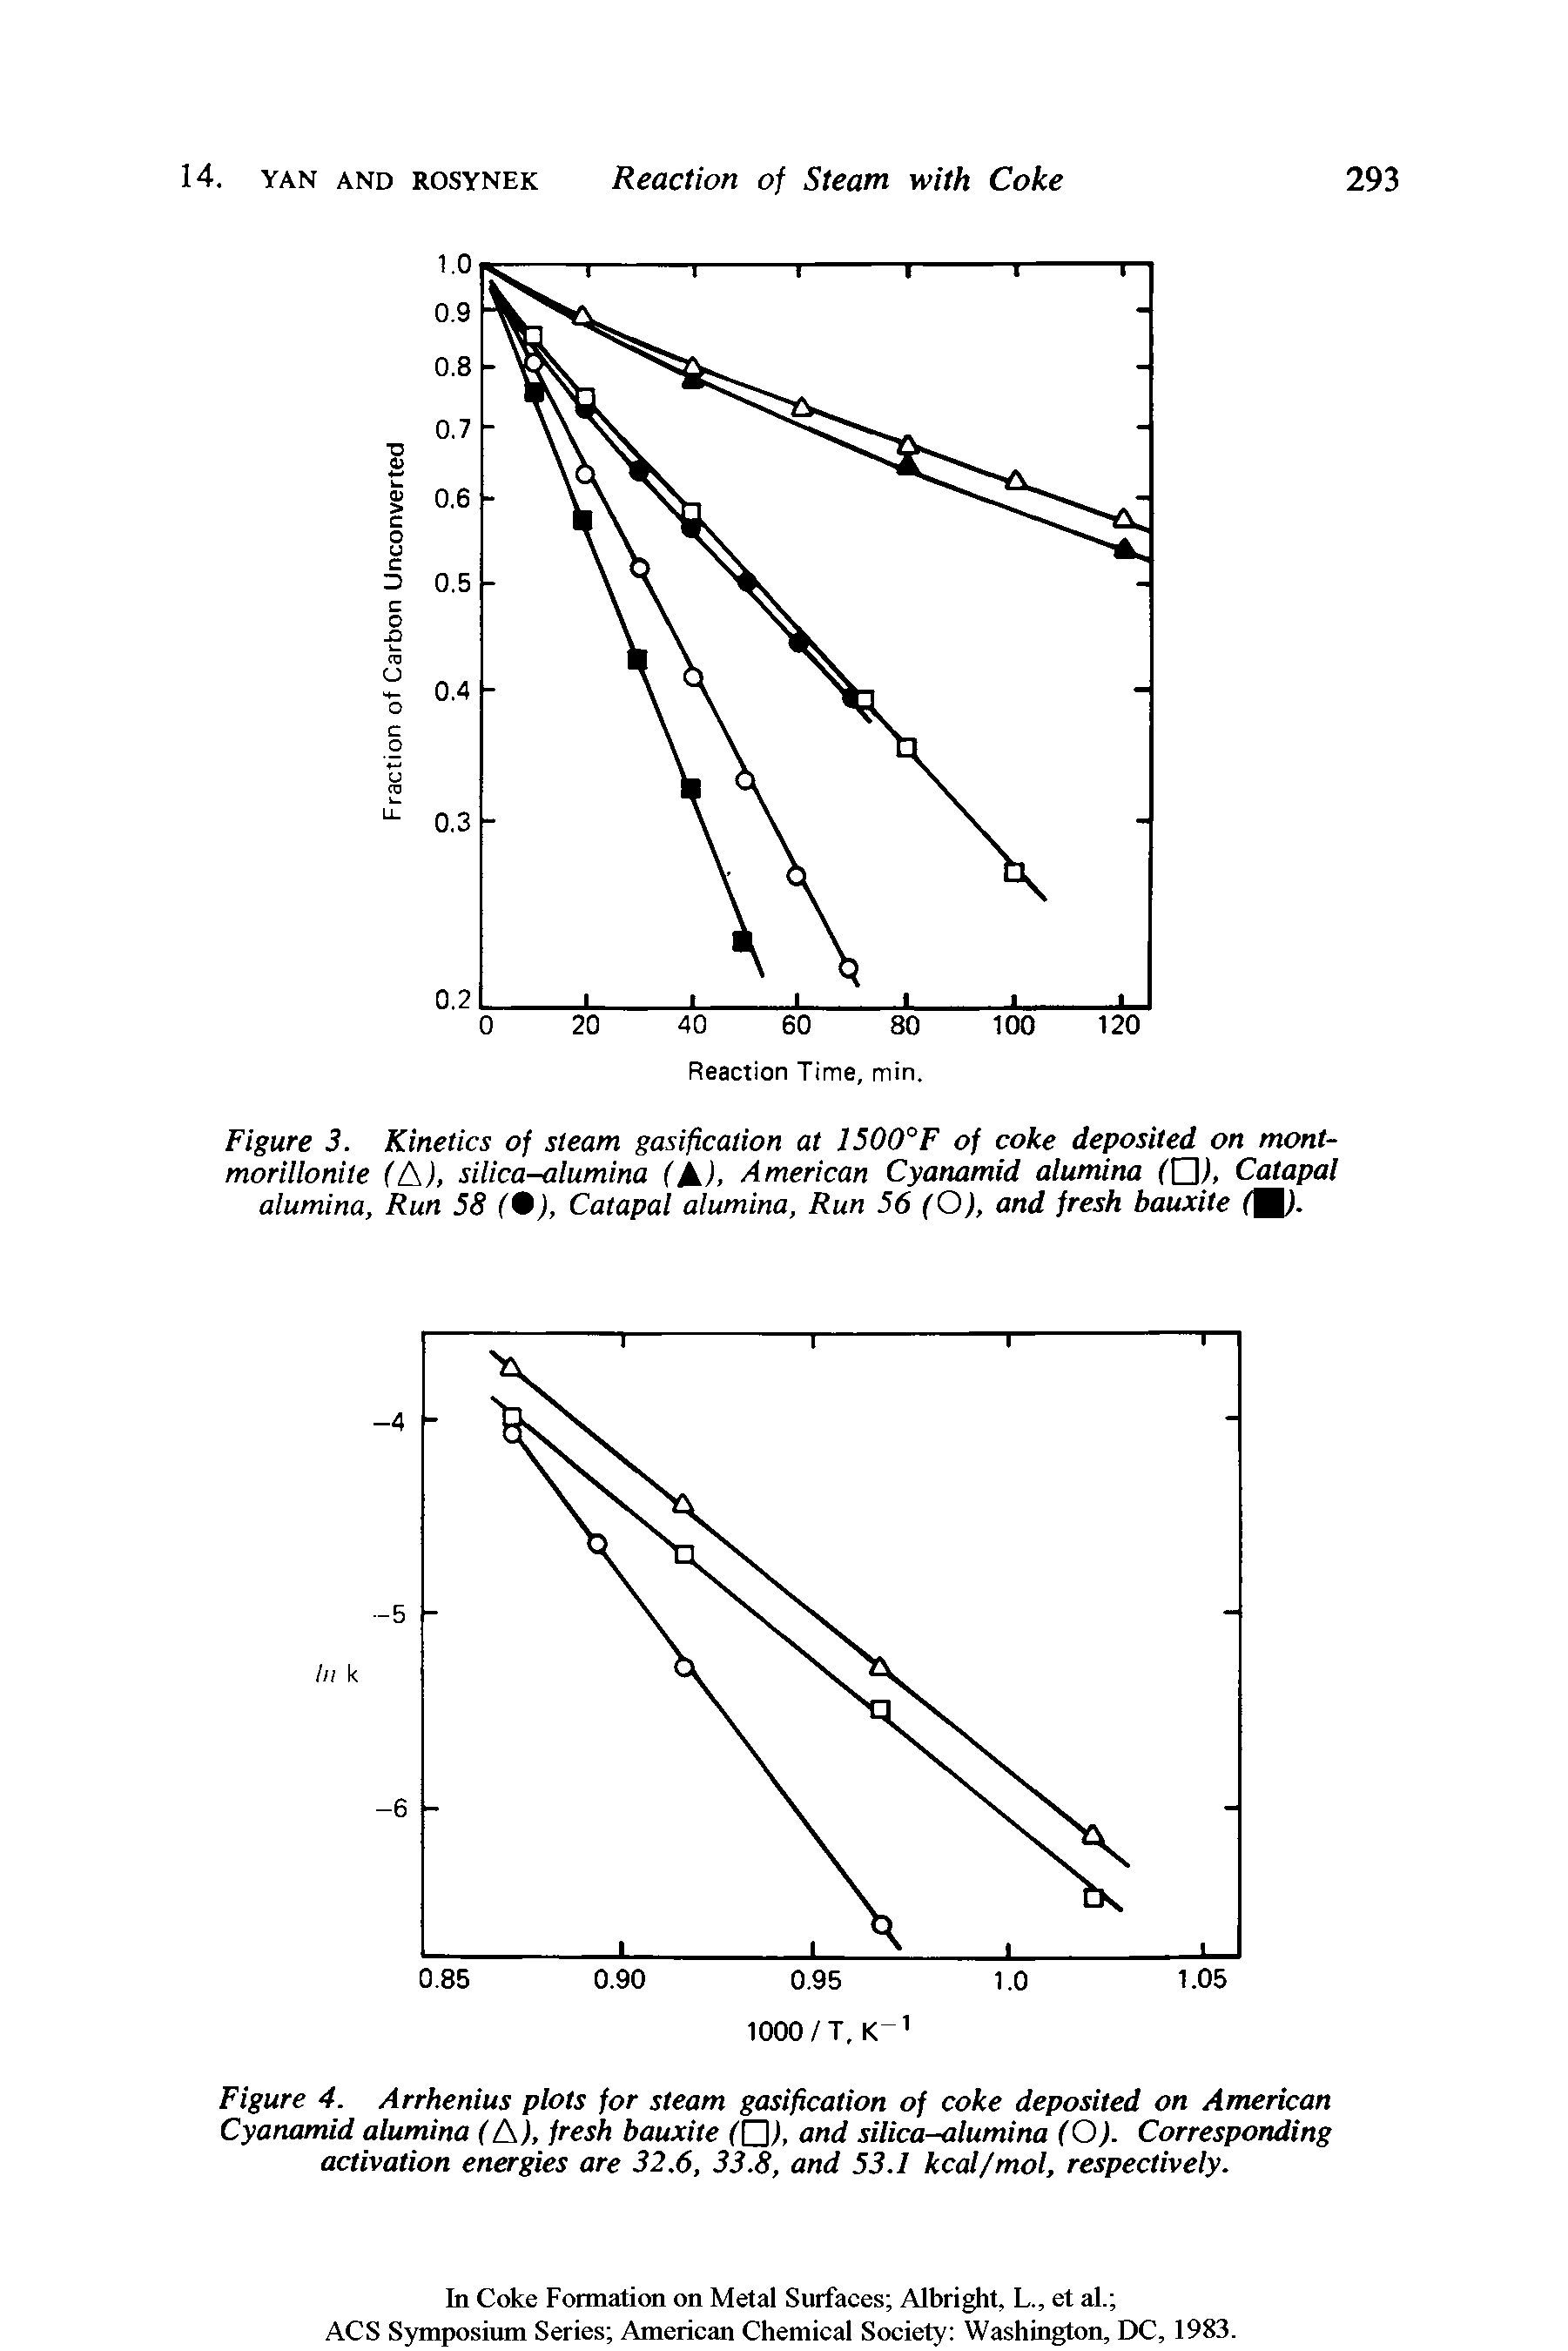 Figure 3. Kinetics of steam gasification at 1500°F of coke deposited on mont-morillonite (AJ, silica-alumina (Al, American Cyanamid alumina ( ,), Catapal alumina, Run 58 (9), Catapal alumina, Run 56 (O), and fresh bauxite flj.